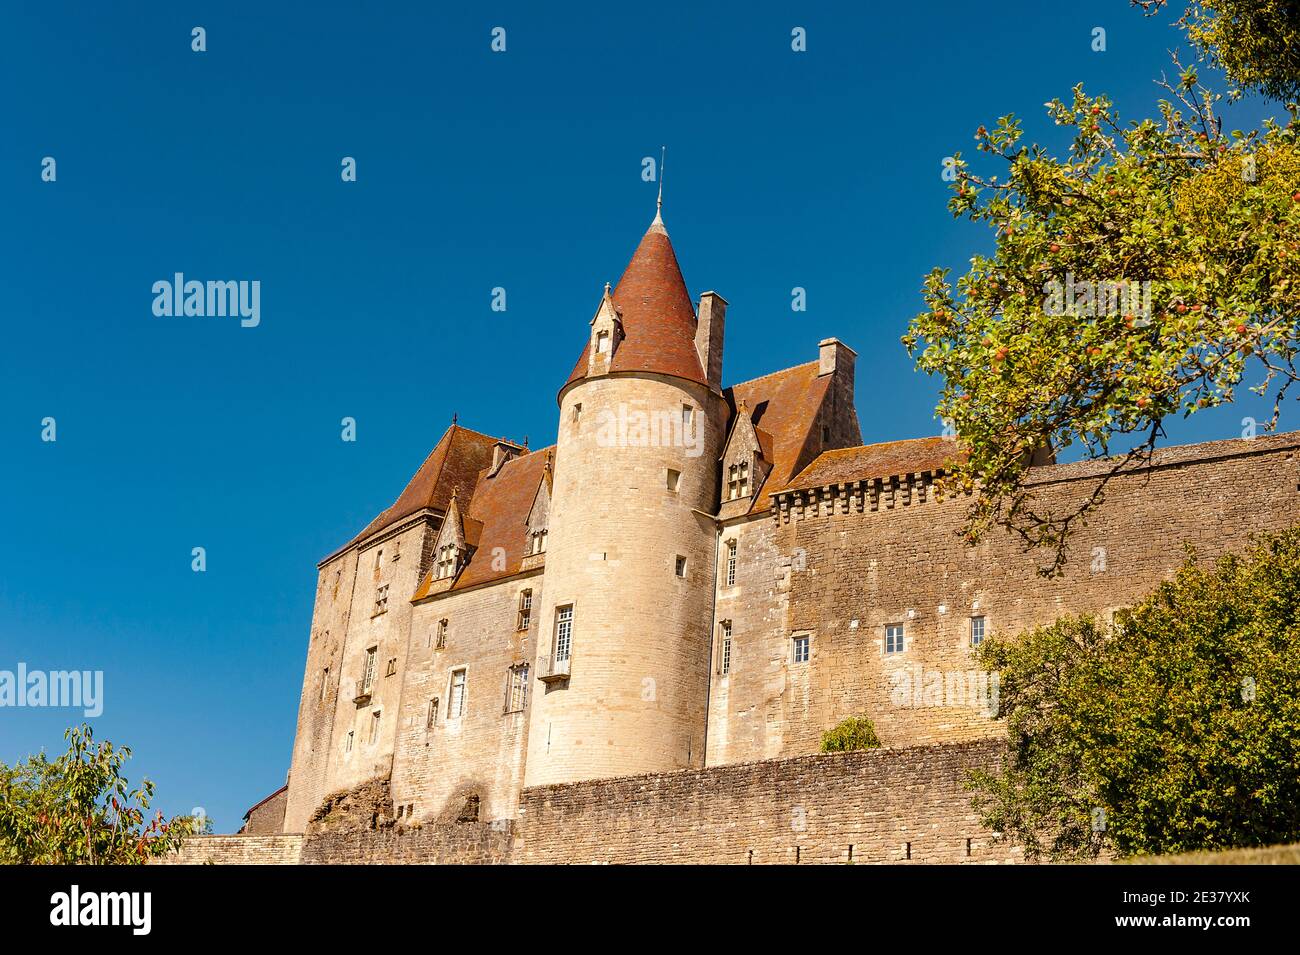 Das Burgschloss von Châteauneuf-en-Auxois. Foto: Hilke Maunder Stock Photo